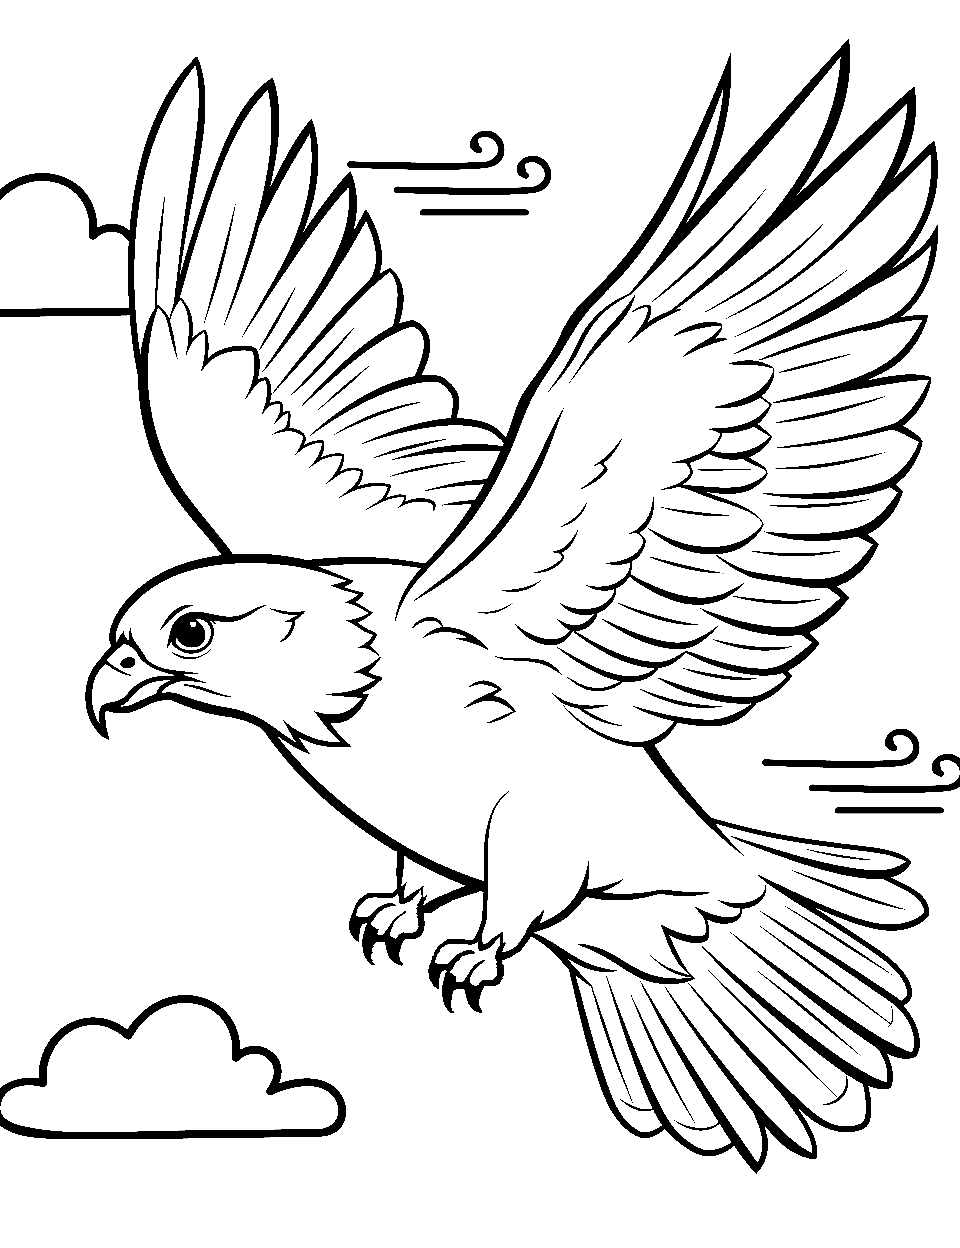 Falcon's Aerodynamic Form Coloring Page - A falcon speeding through the air with precision.